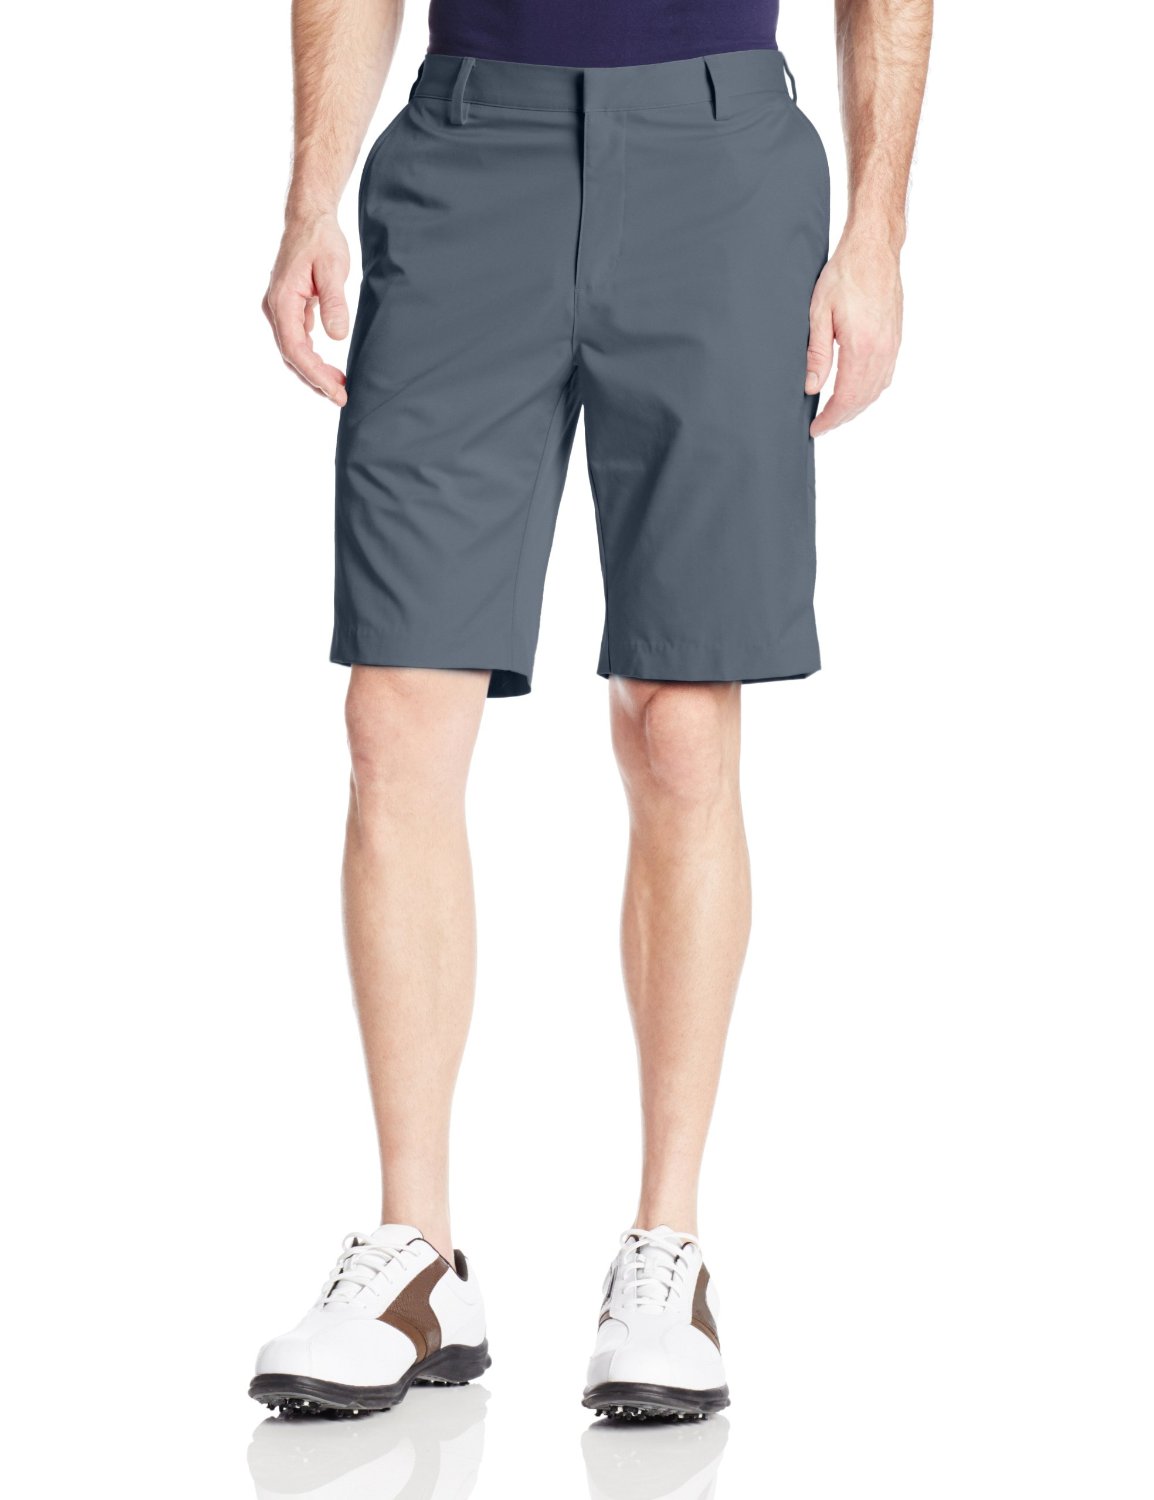 Adidas Puremotion Tech Golf Shorts